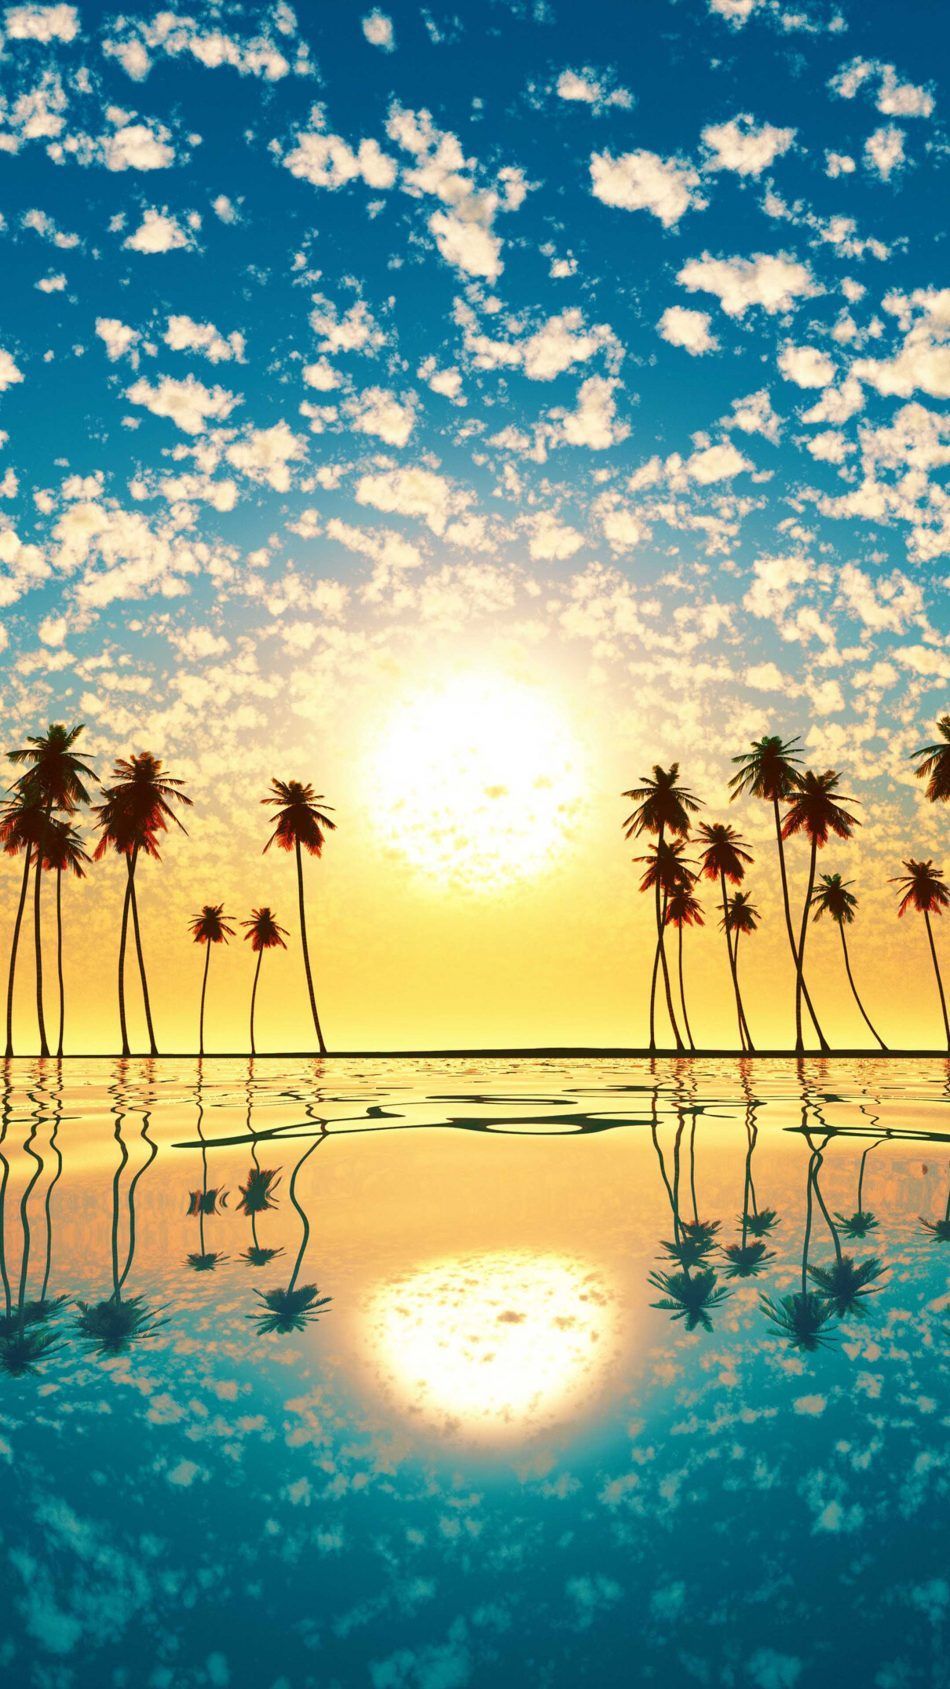 Sunset Palm Tree Cloud Sky Reflection 4K Ultra HD Mobile Wallpaper. Best nature wallpaper, Scenery wallpaper, iPhone wallpaper sky